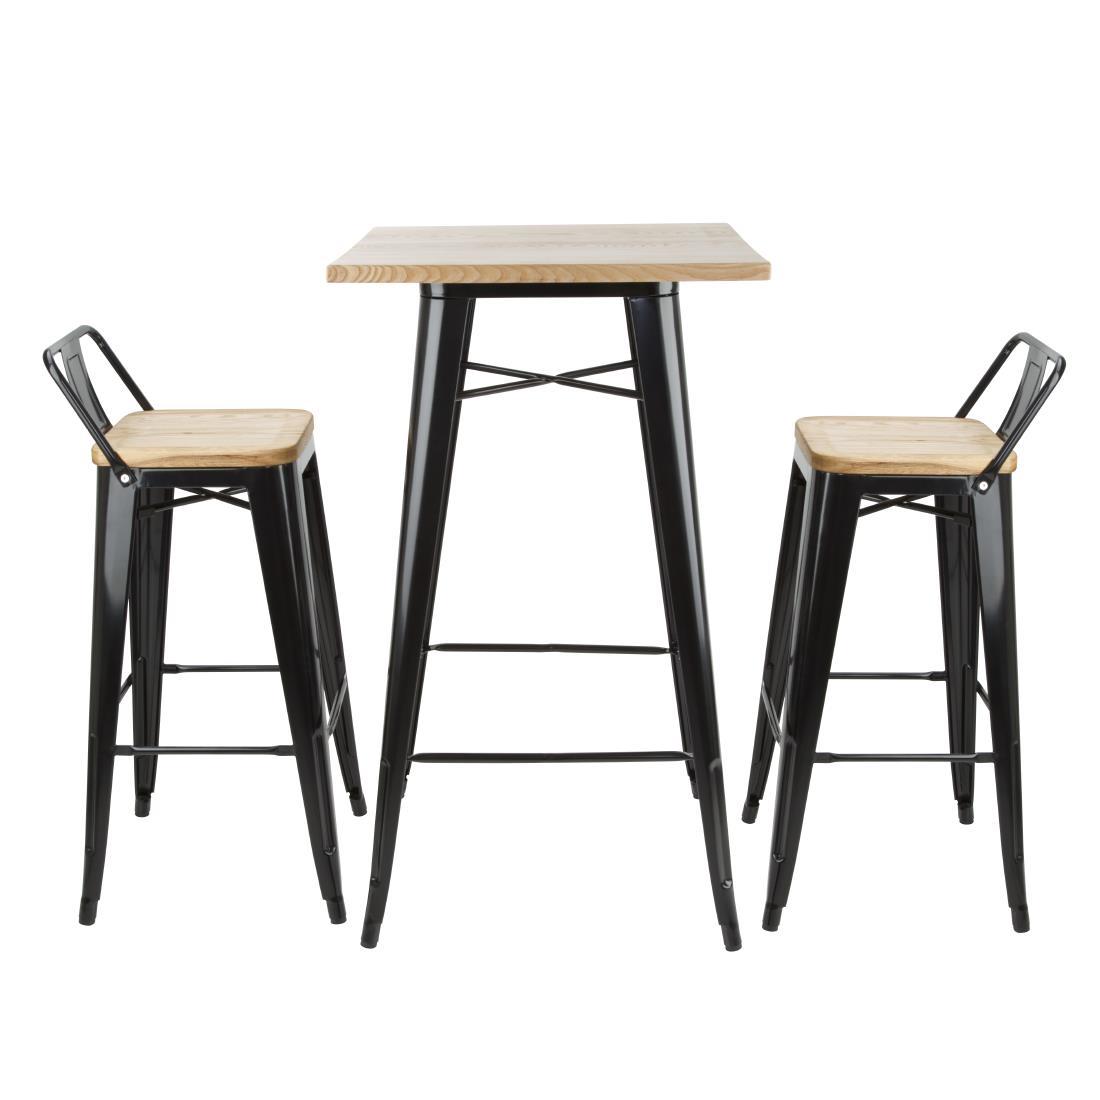 Bolero Bistro Bar Table with Wooden Top Black (Single) - FB595  - 6